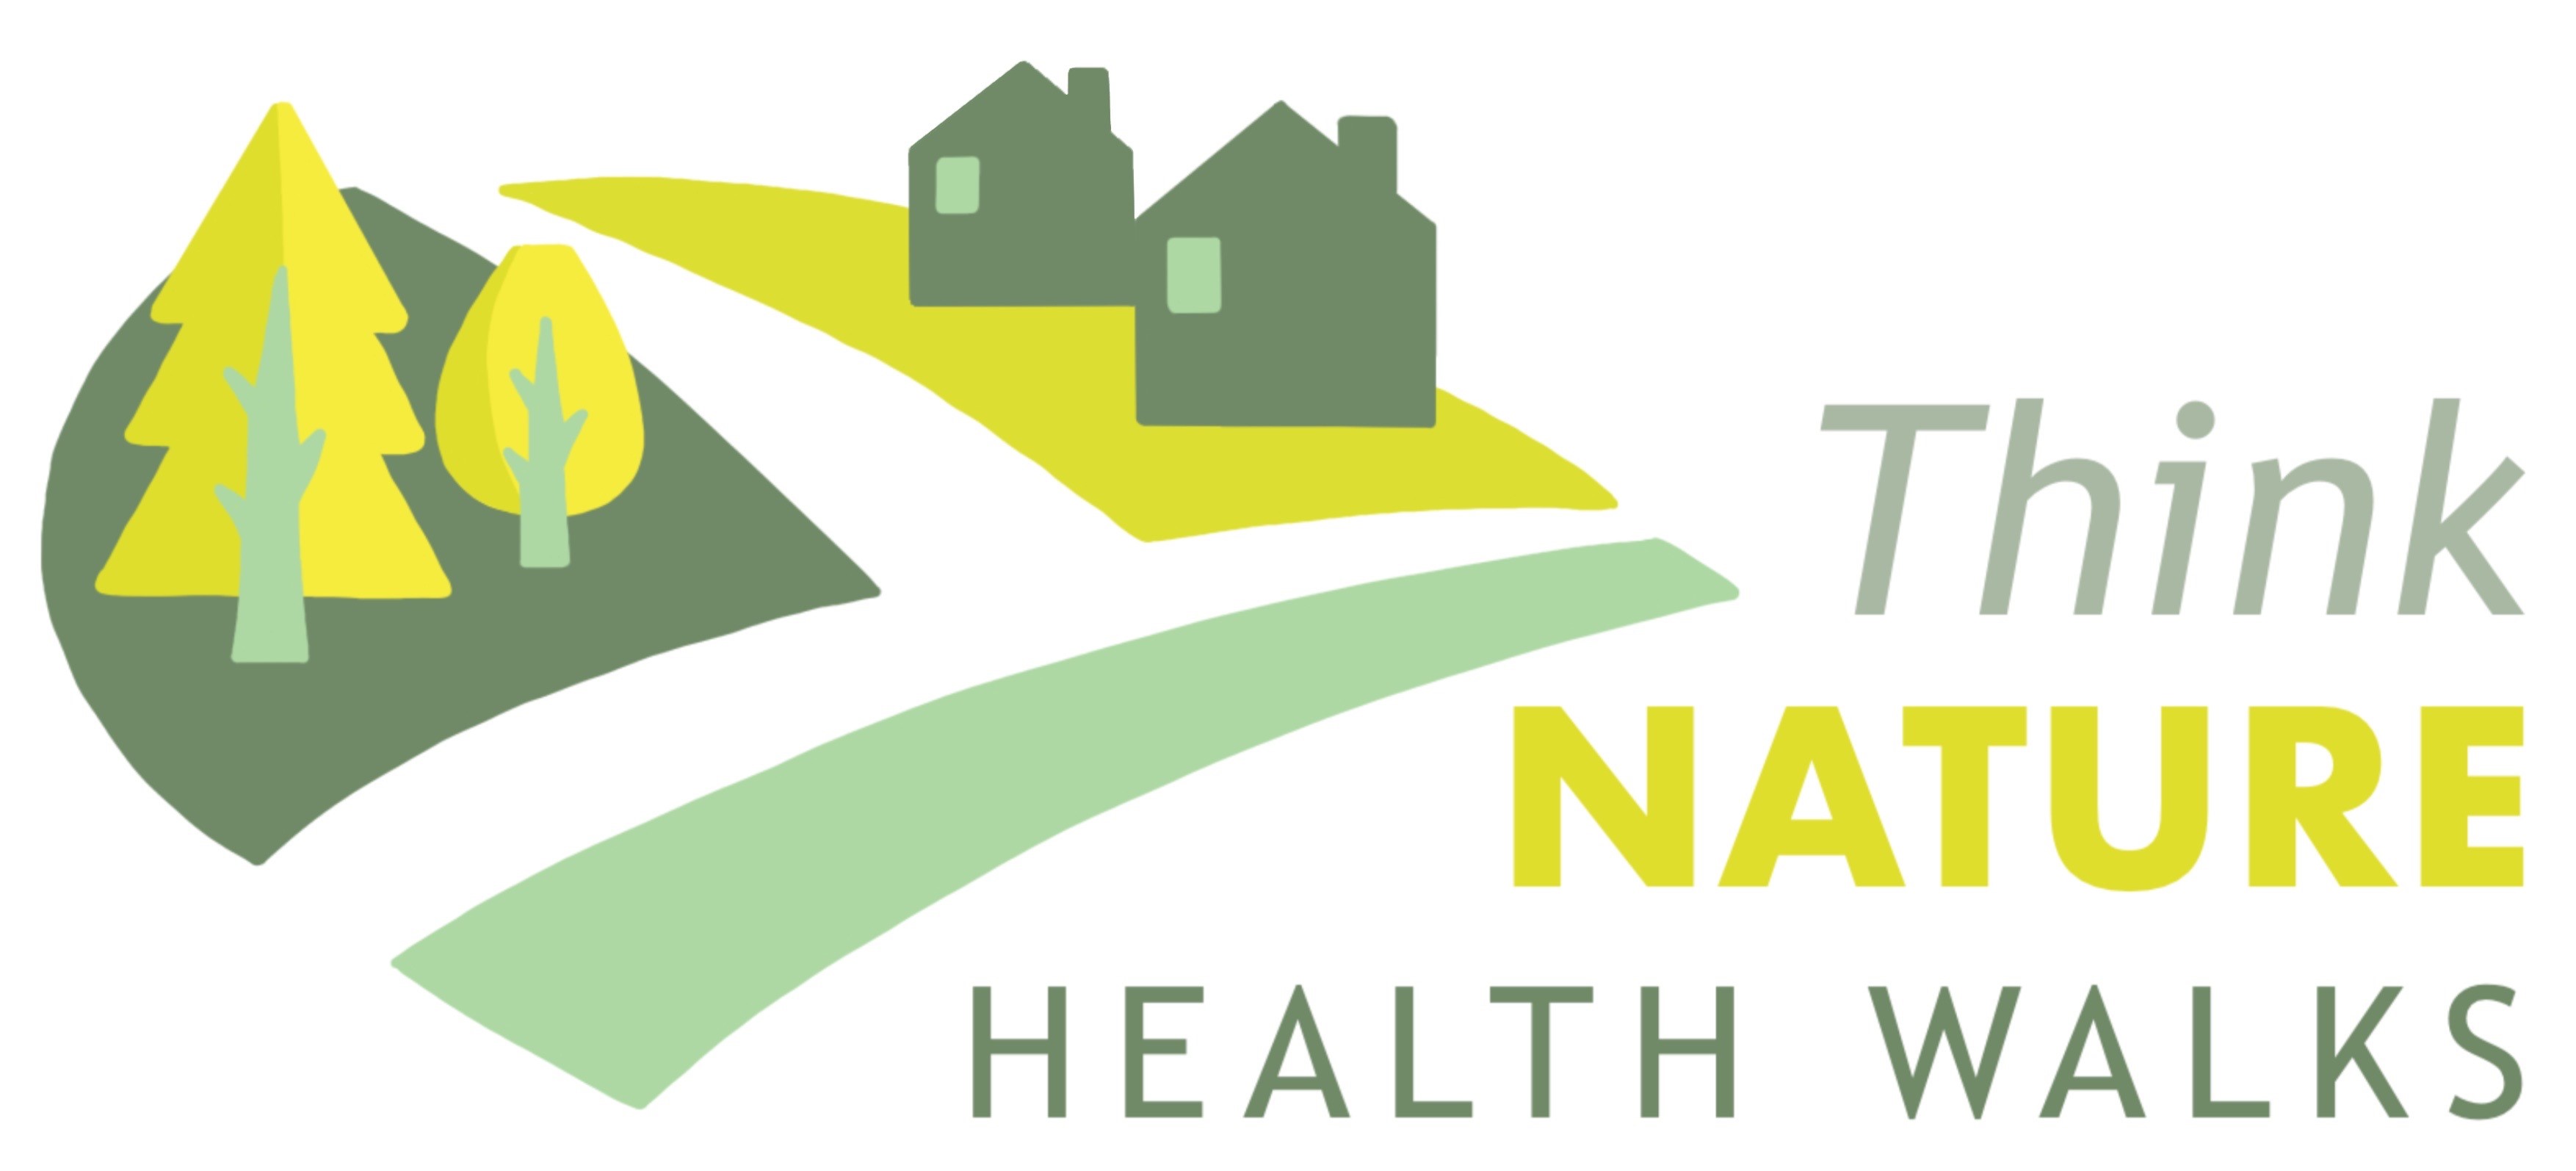 Think Health Think Nature logo2